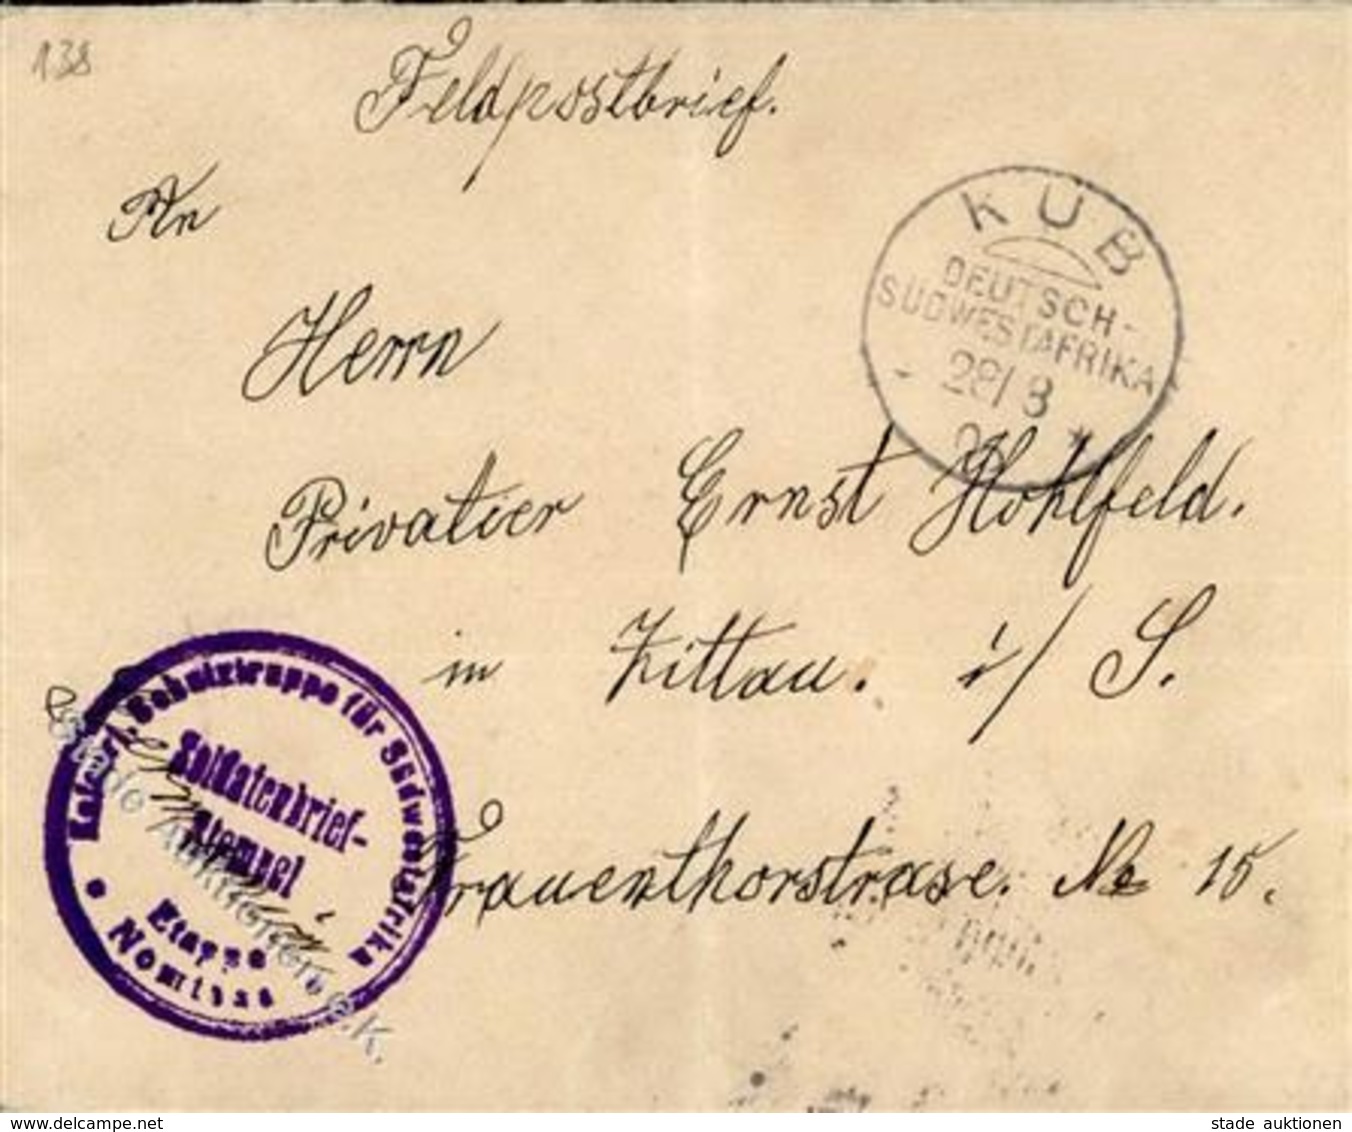 Deutsche Kolonien DSW - Feldpostbrief (gefaltet) Mit O -KUB 28.8.06- + Schutztruppen-o ETAPPE NOMISSA I-II Colonies - Histoire